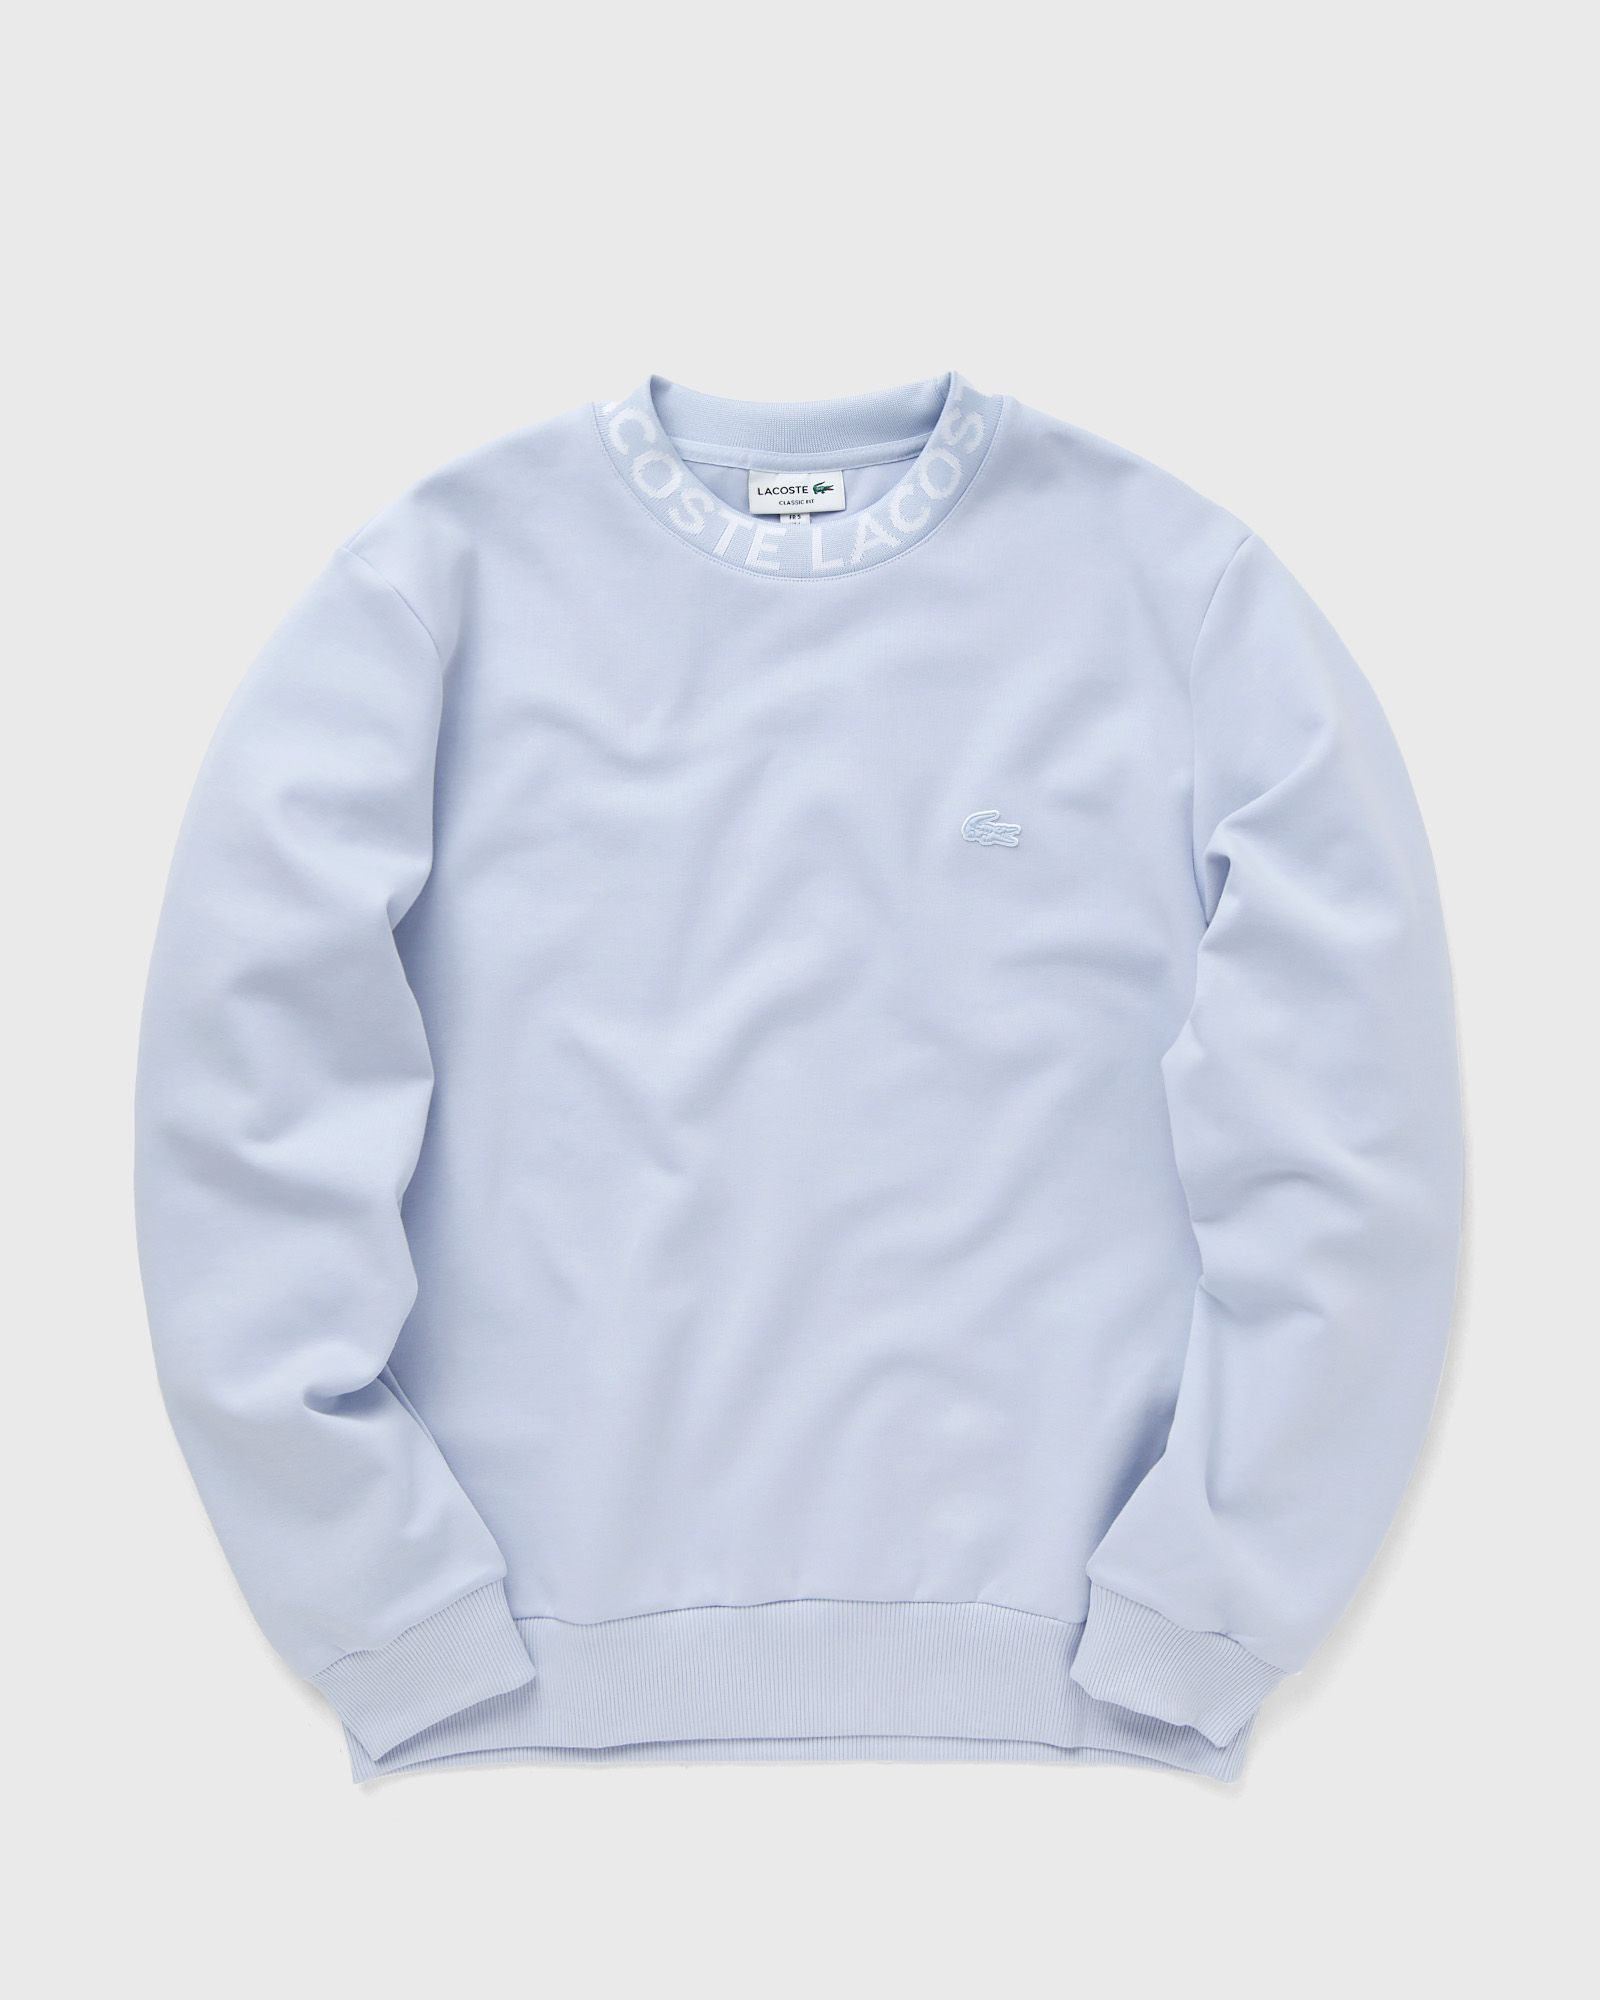 Lacoste LOGO JACQUARD COLLAR DOUBLE FACE SWEATSHIRT men Sweatshirts blue in Größe:M von Lacoste